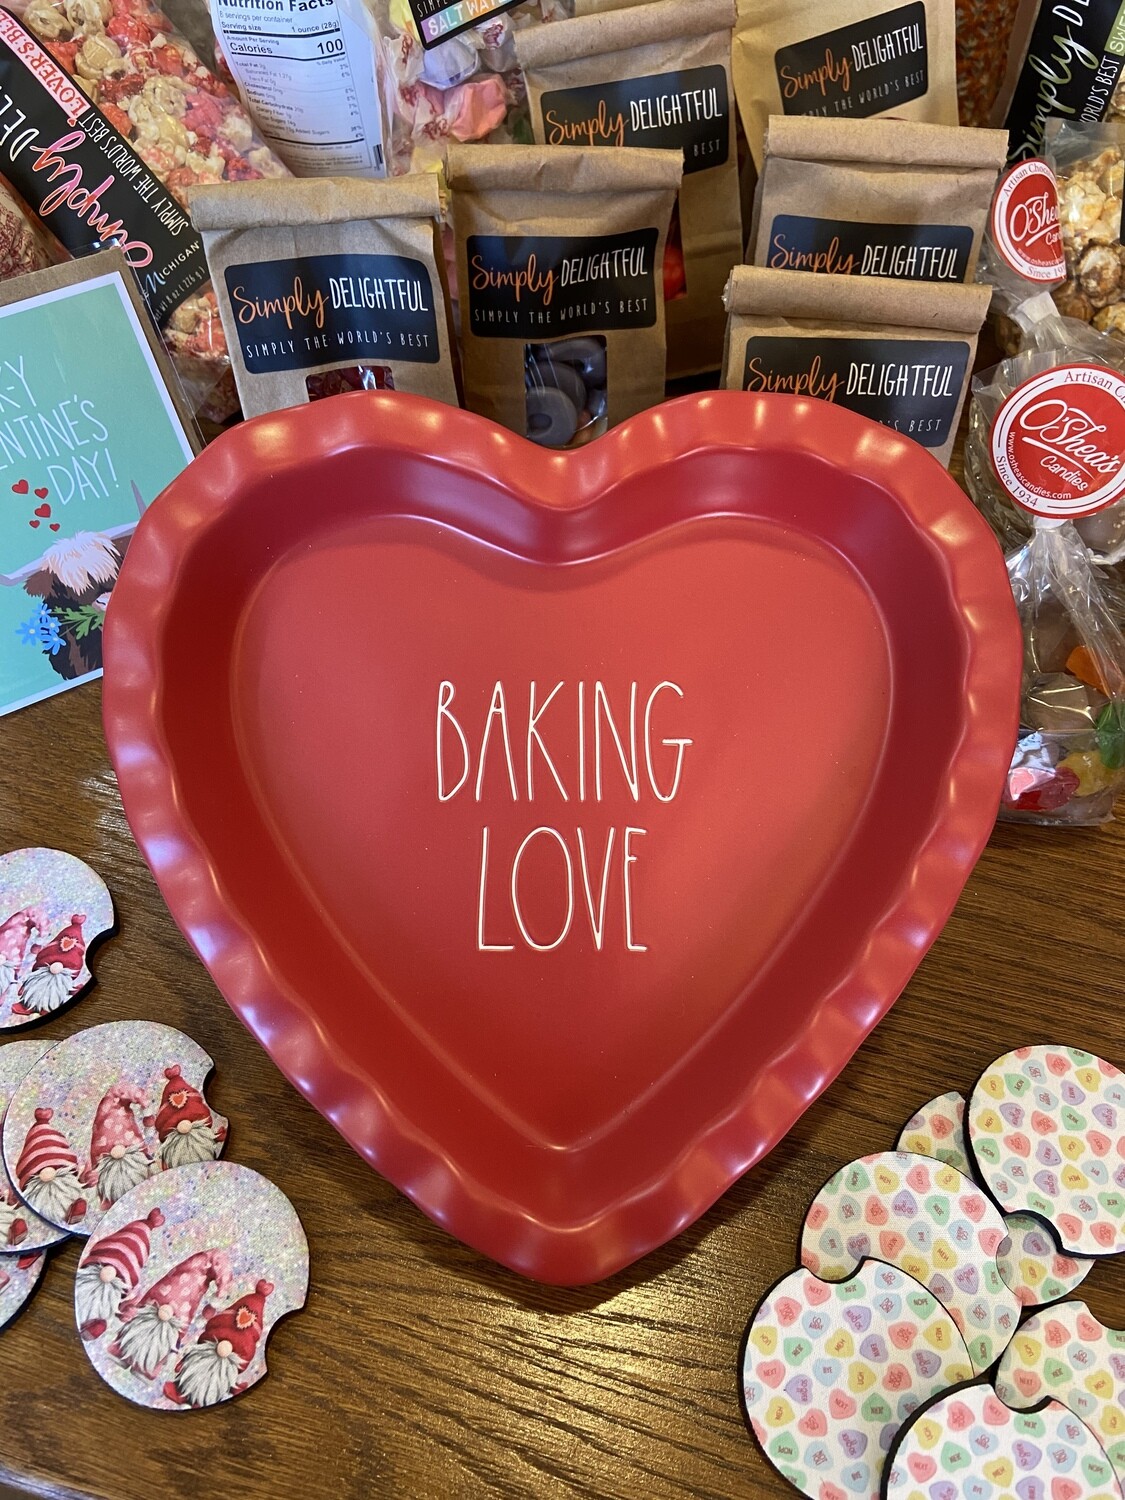 Baking Love Heart Shaped Baking Pan